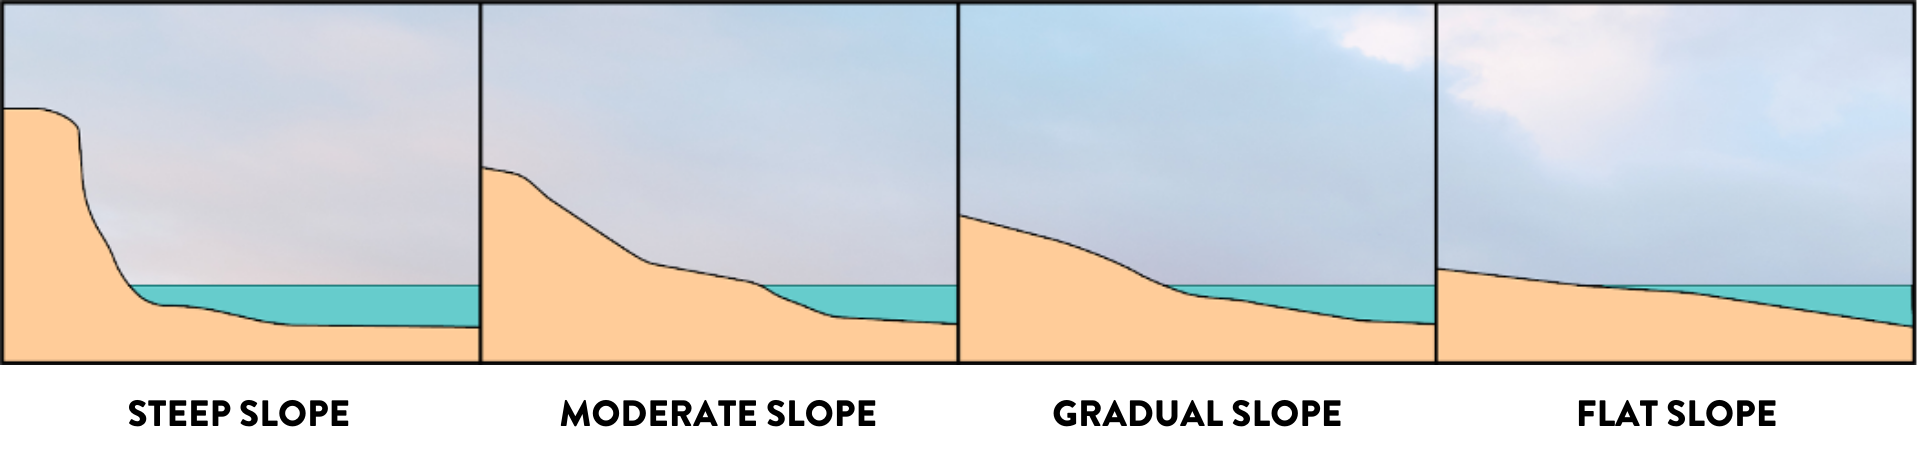 slopes of shorelines